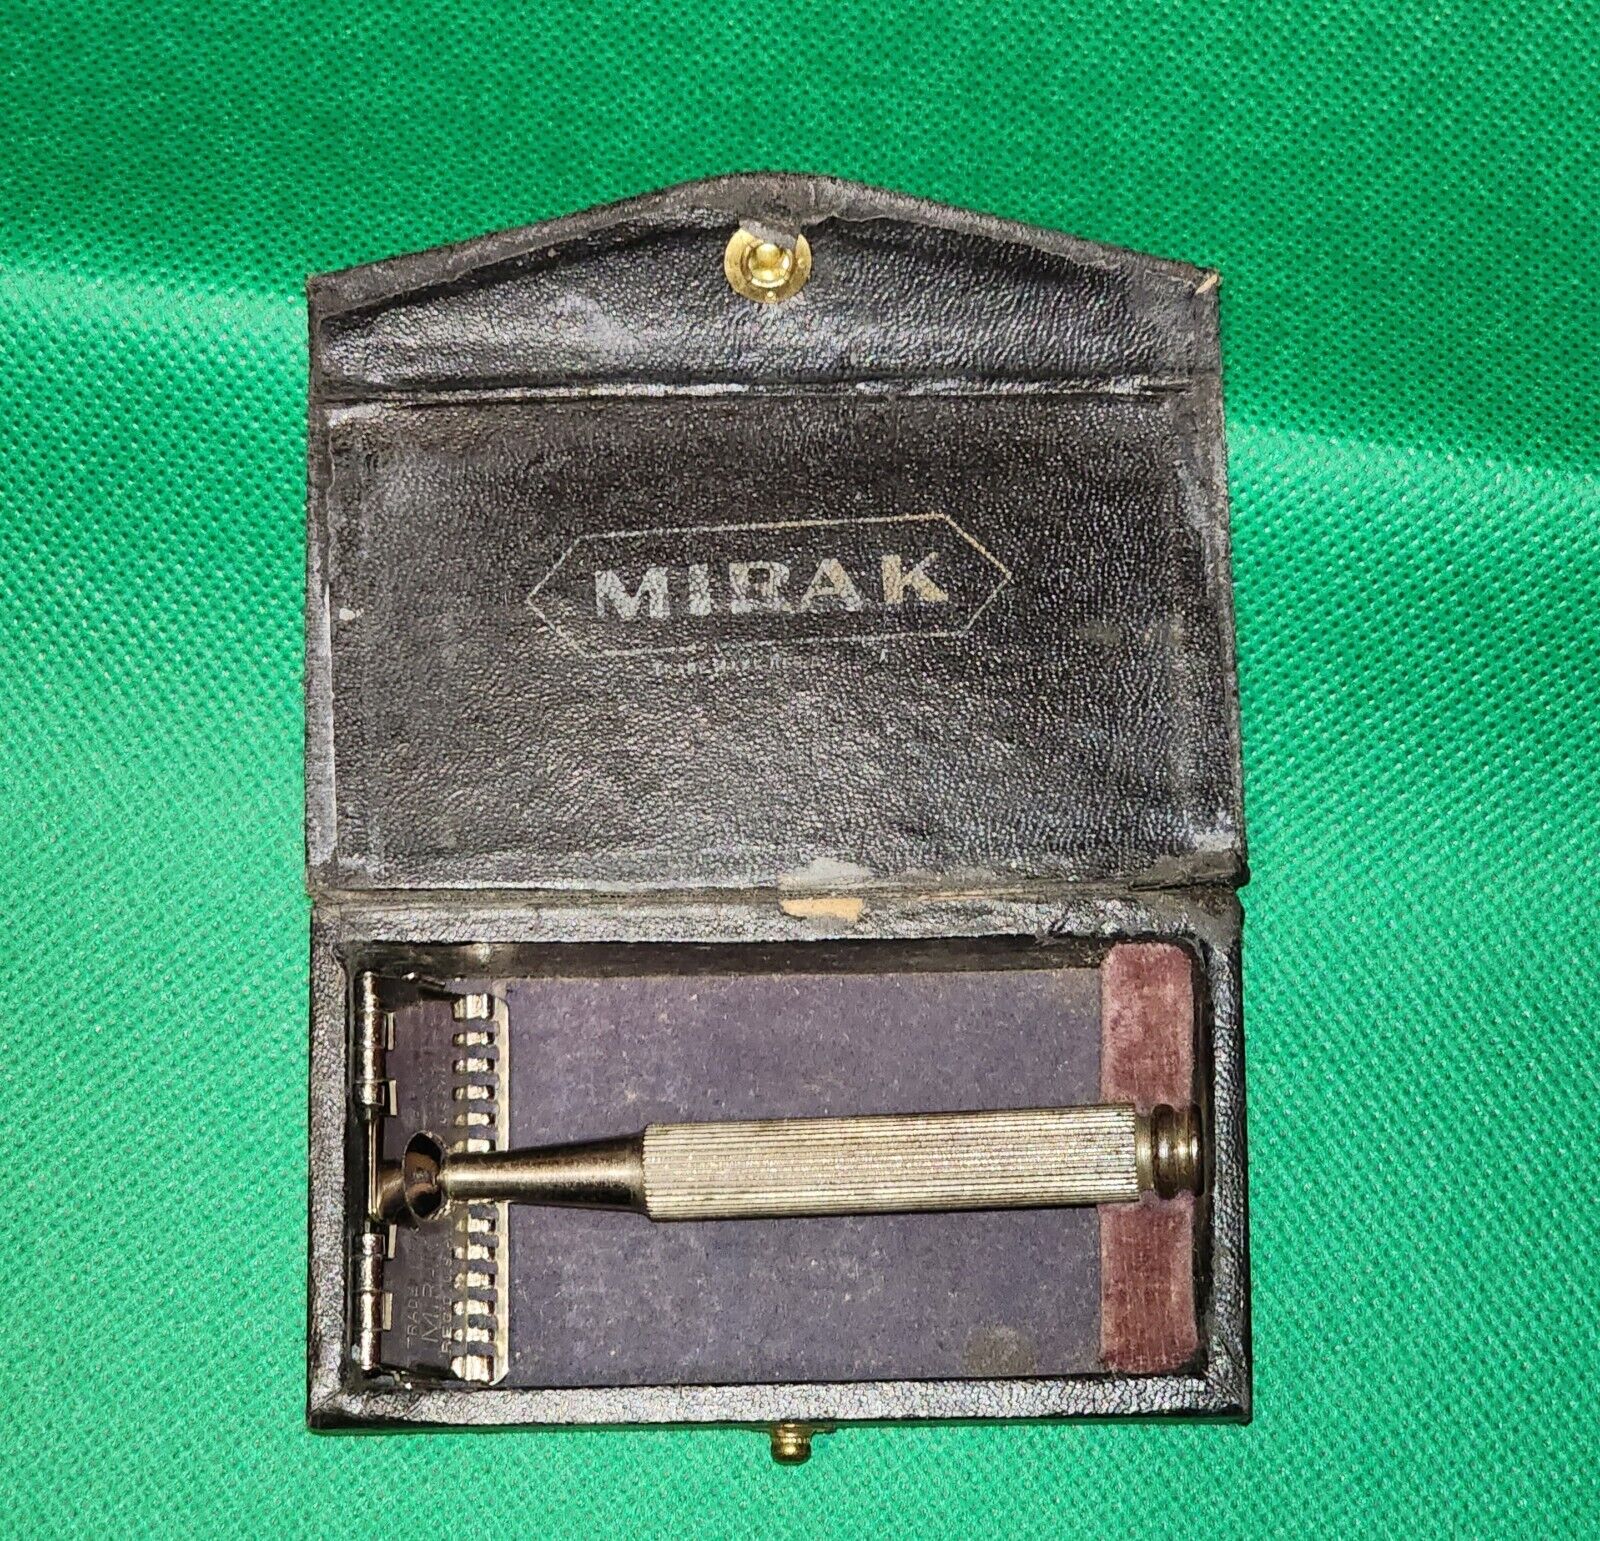 Antique Mirak Safety Razor With Original Case